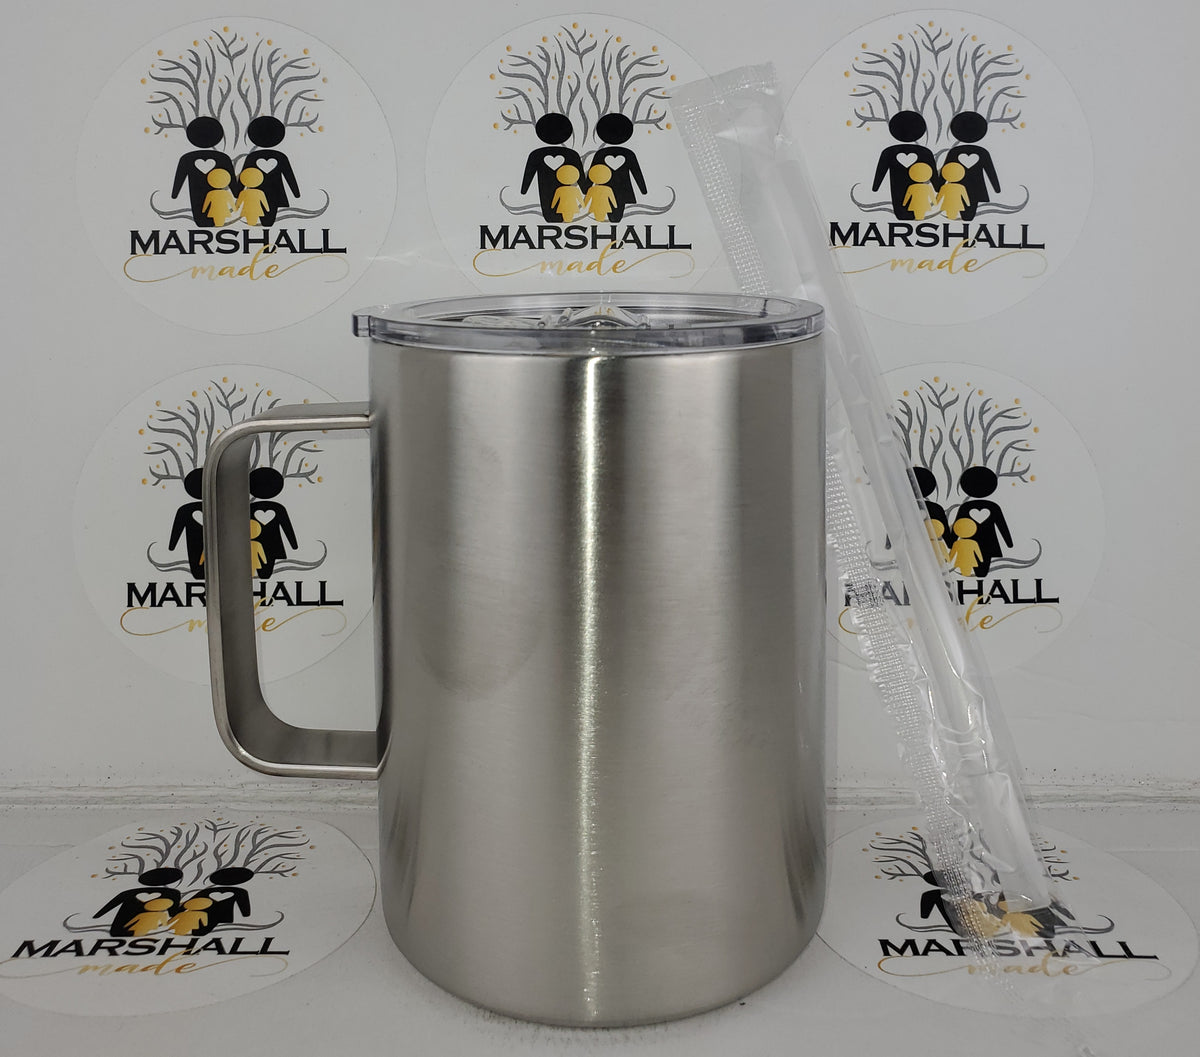 Coffee mug to go, Made of stainless steel